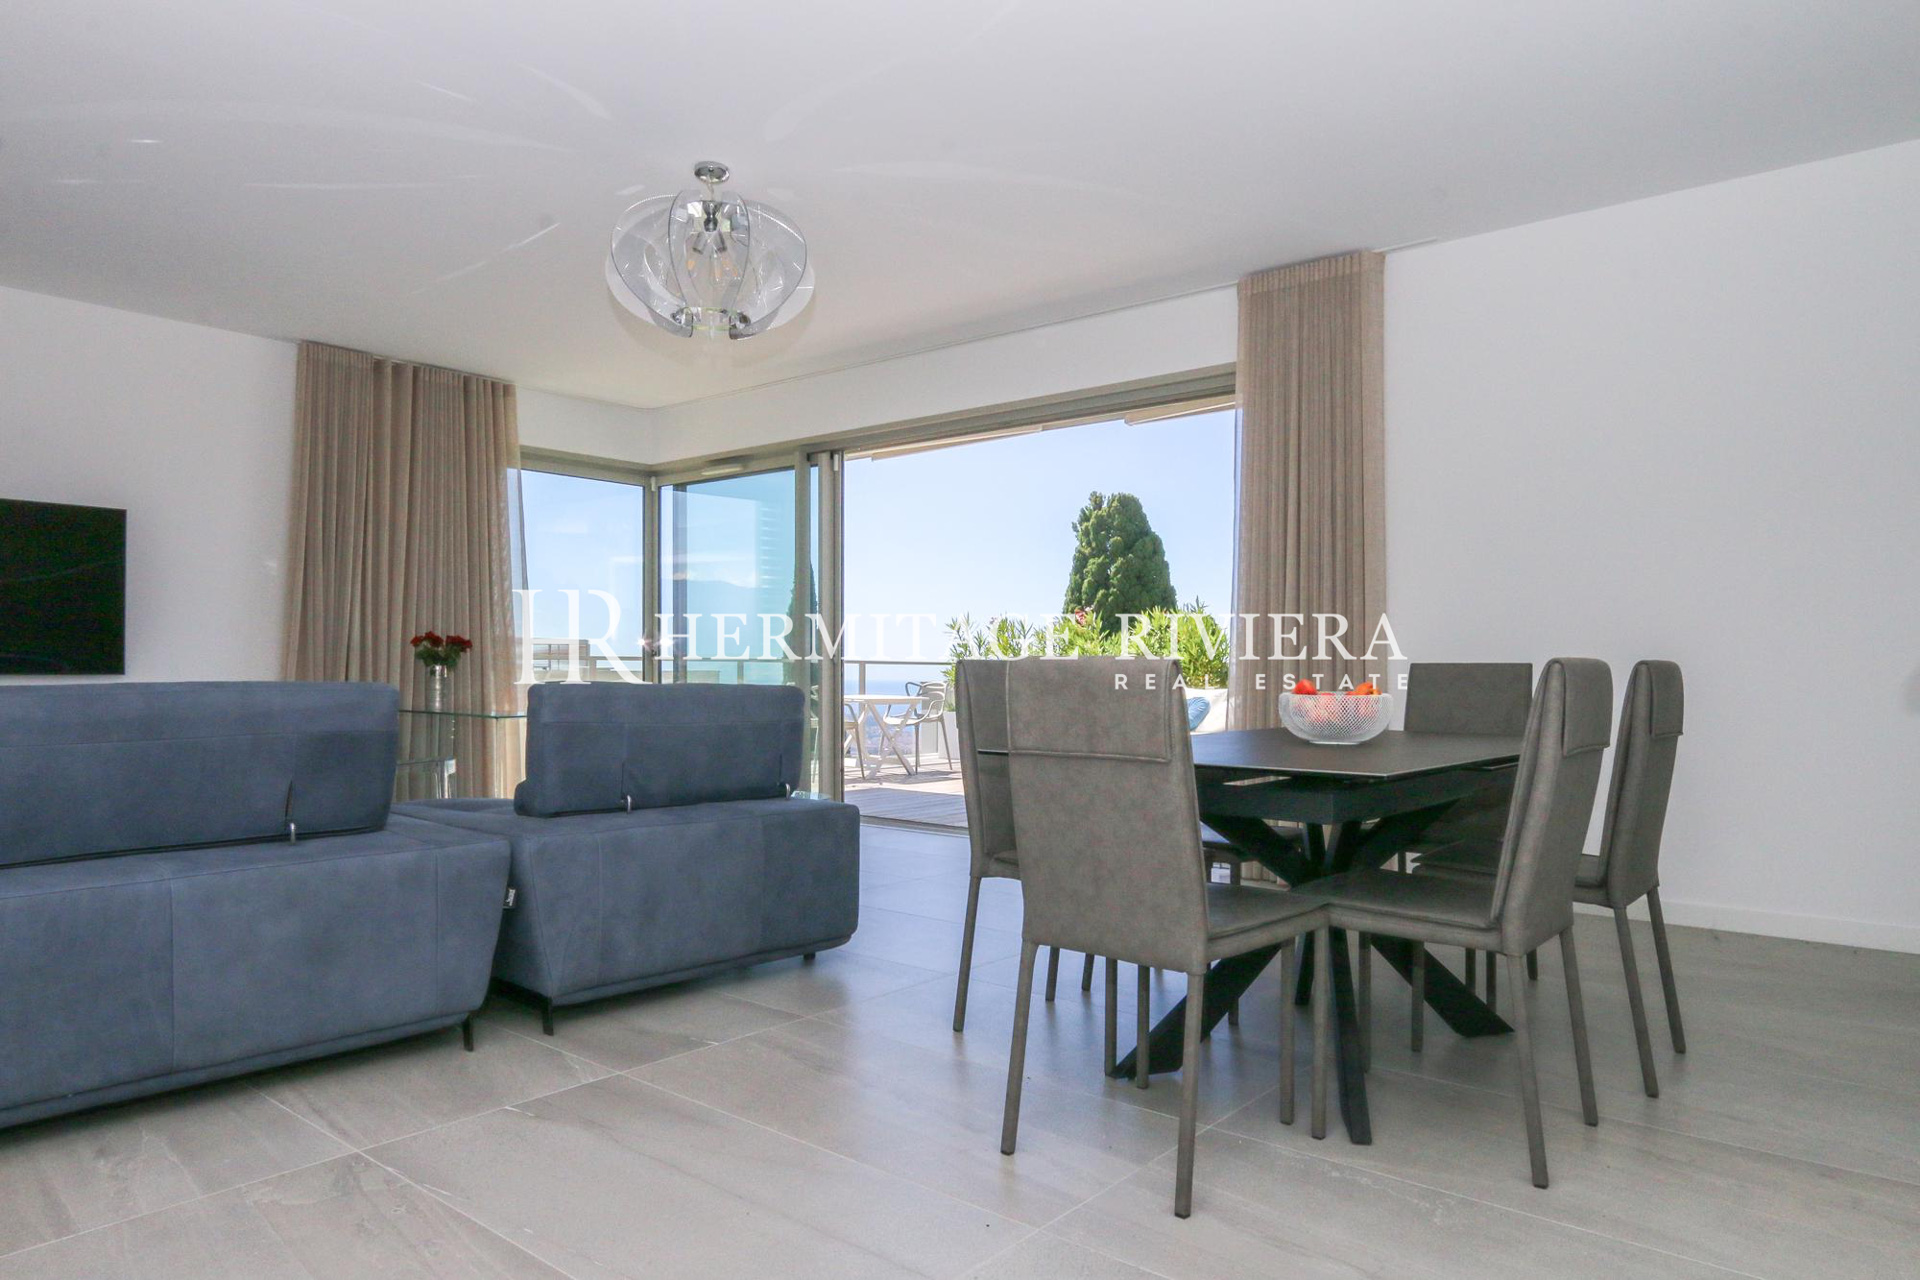 Penthouse in luxury condominium on the hills of Nice (image 14)